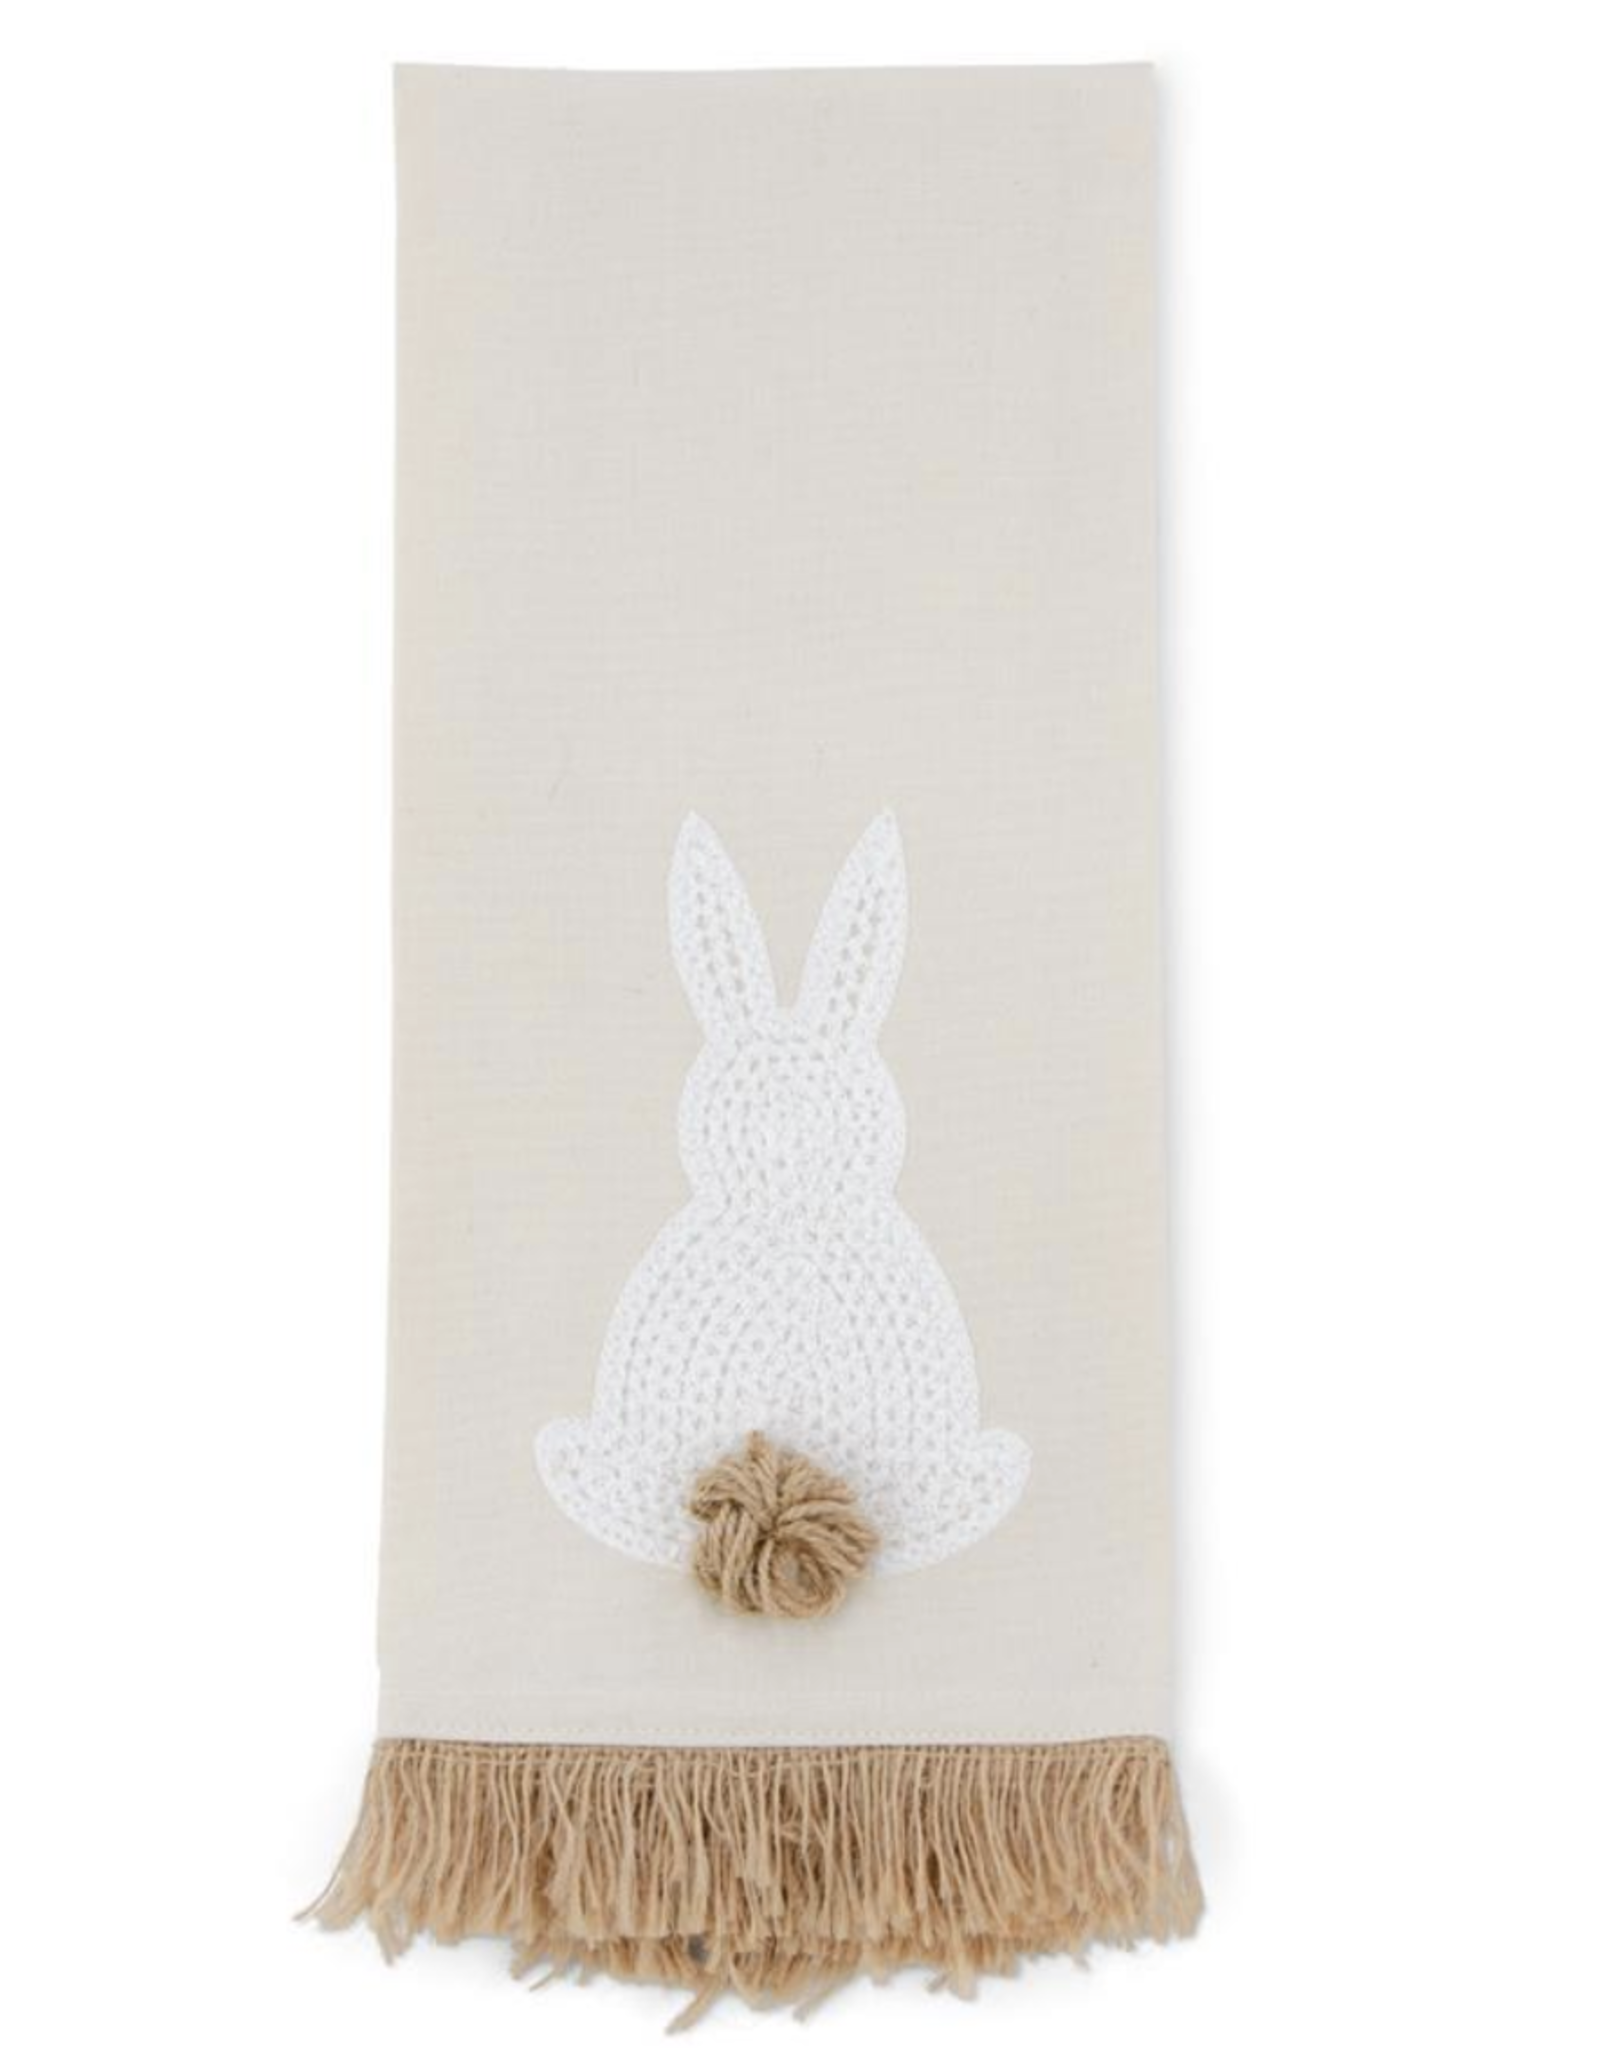 K & K White Embroidered Easter Bunny Tea Towel